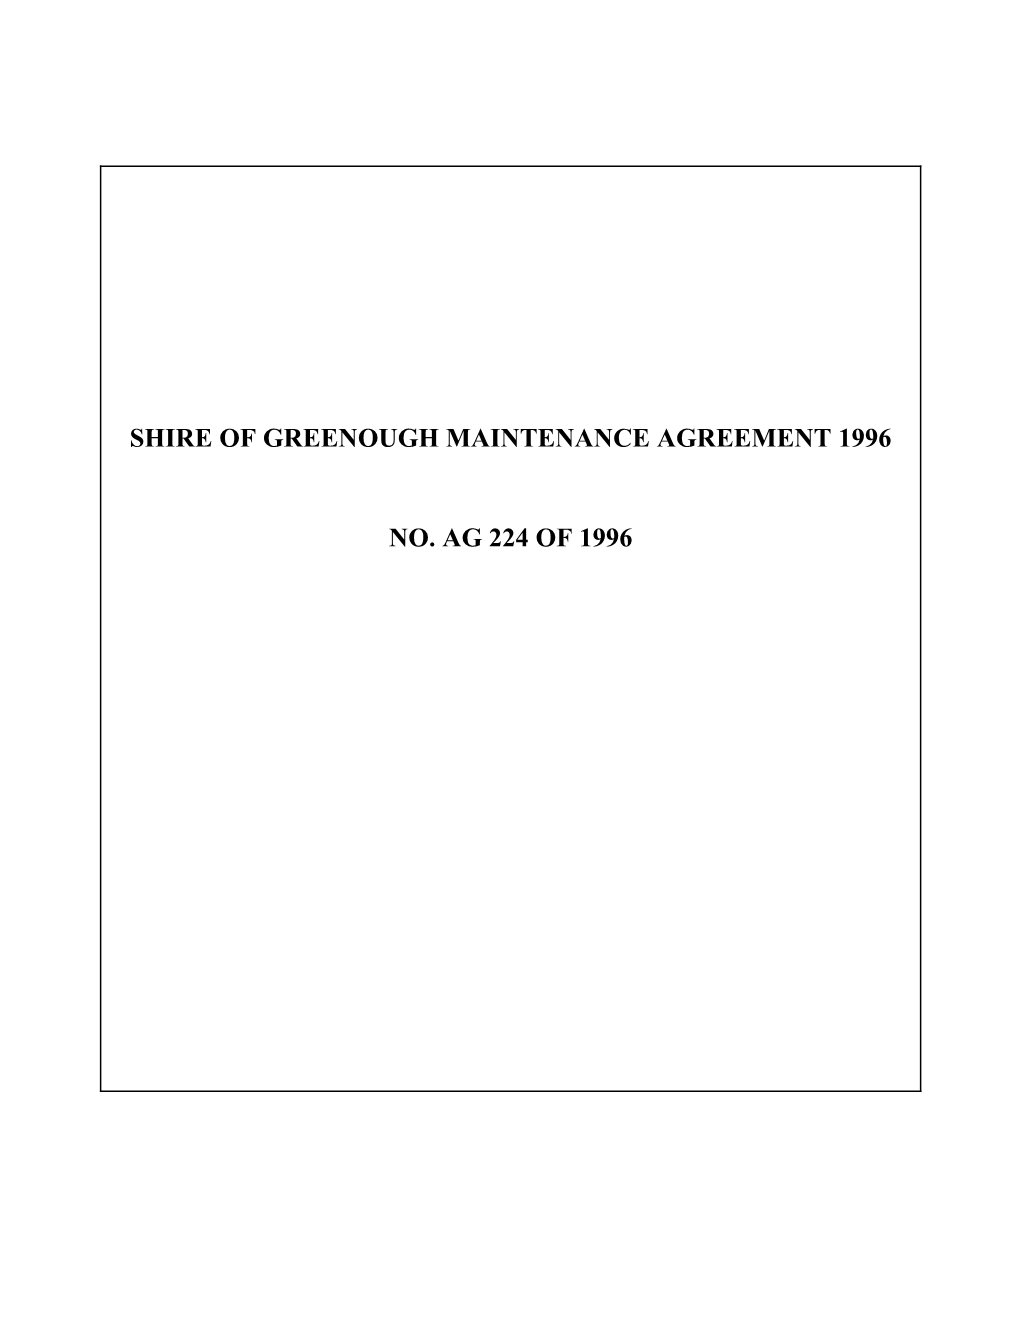 Shire of Greenough Maintenance Agreement 1996